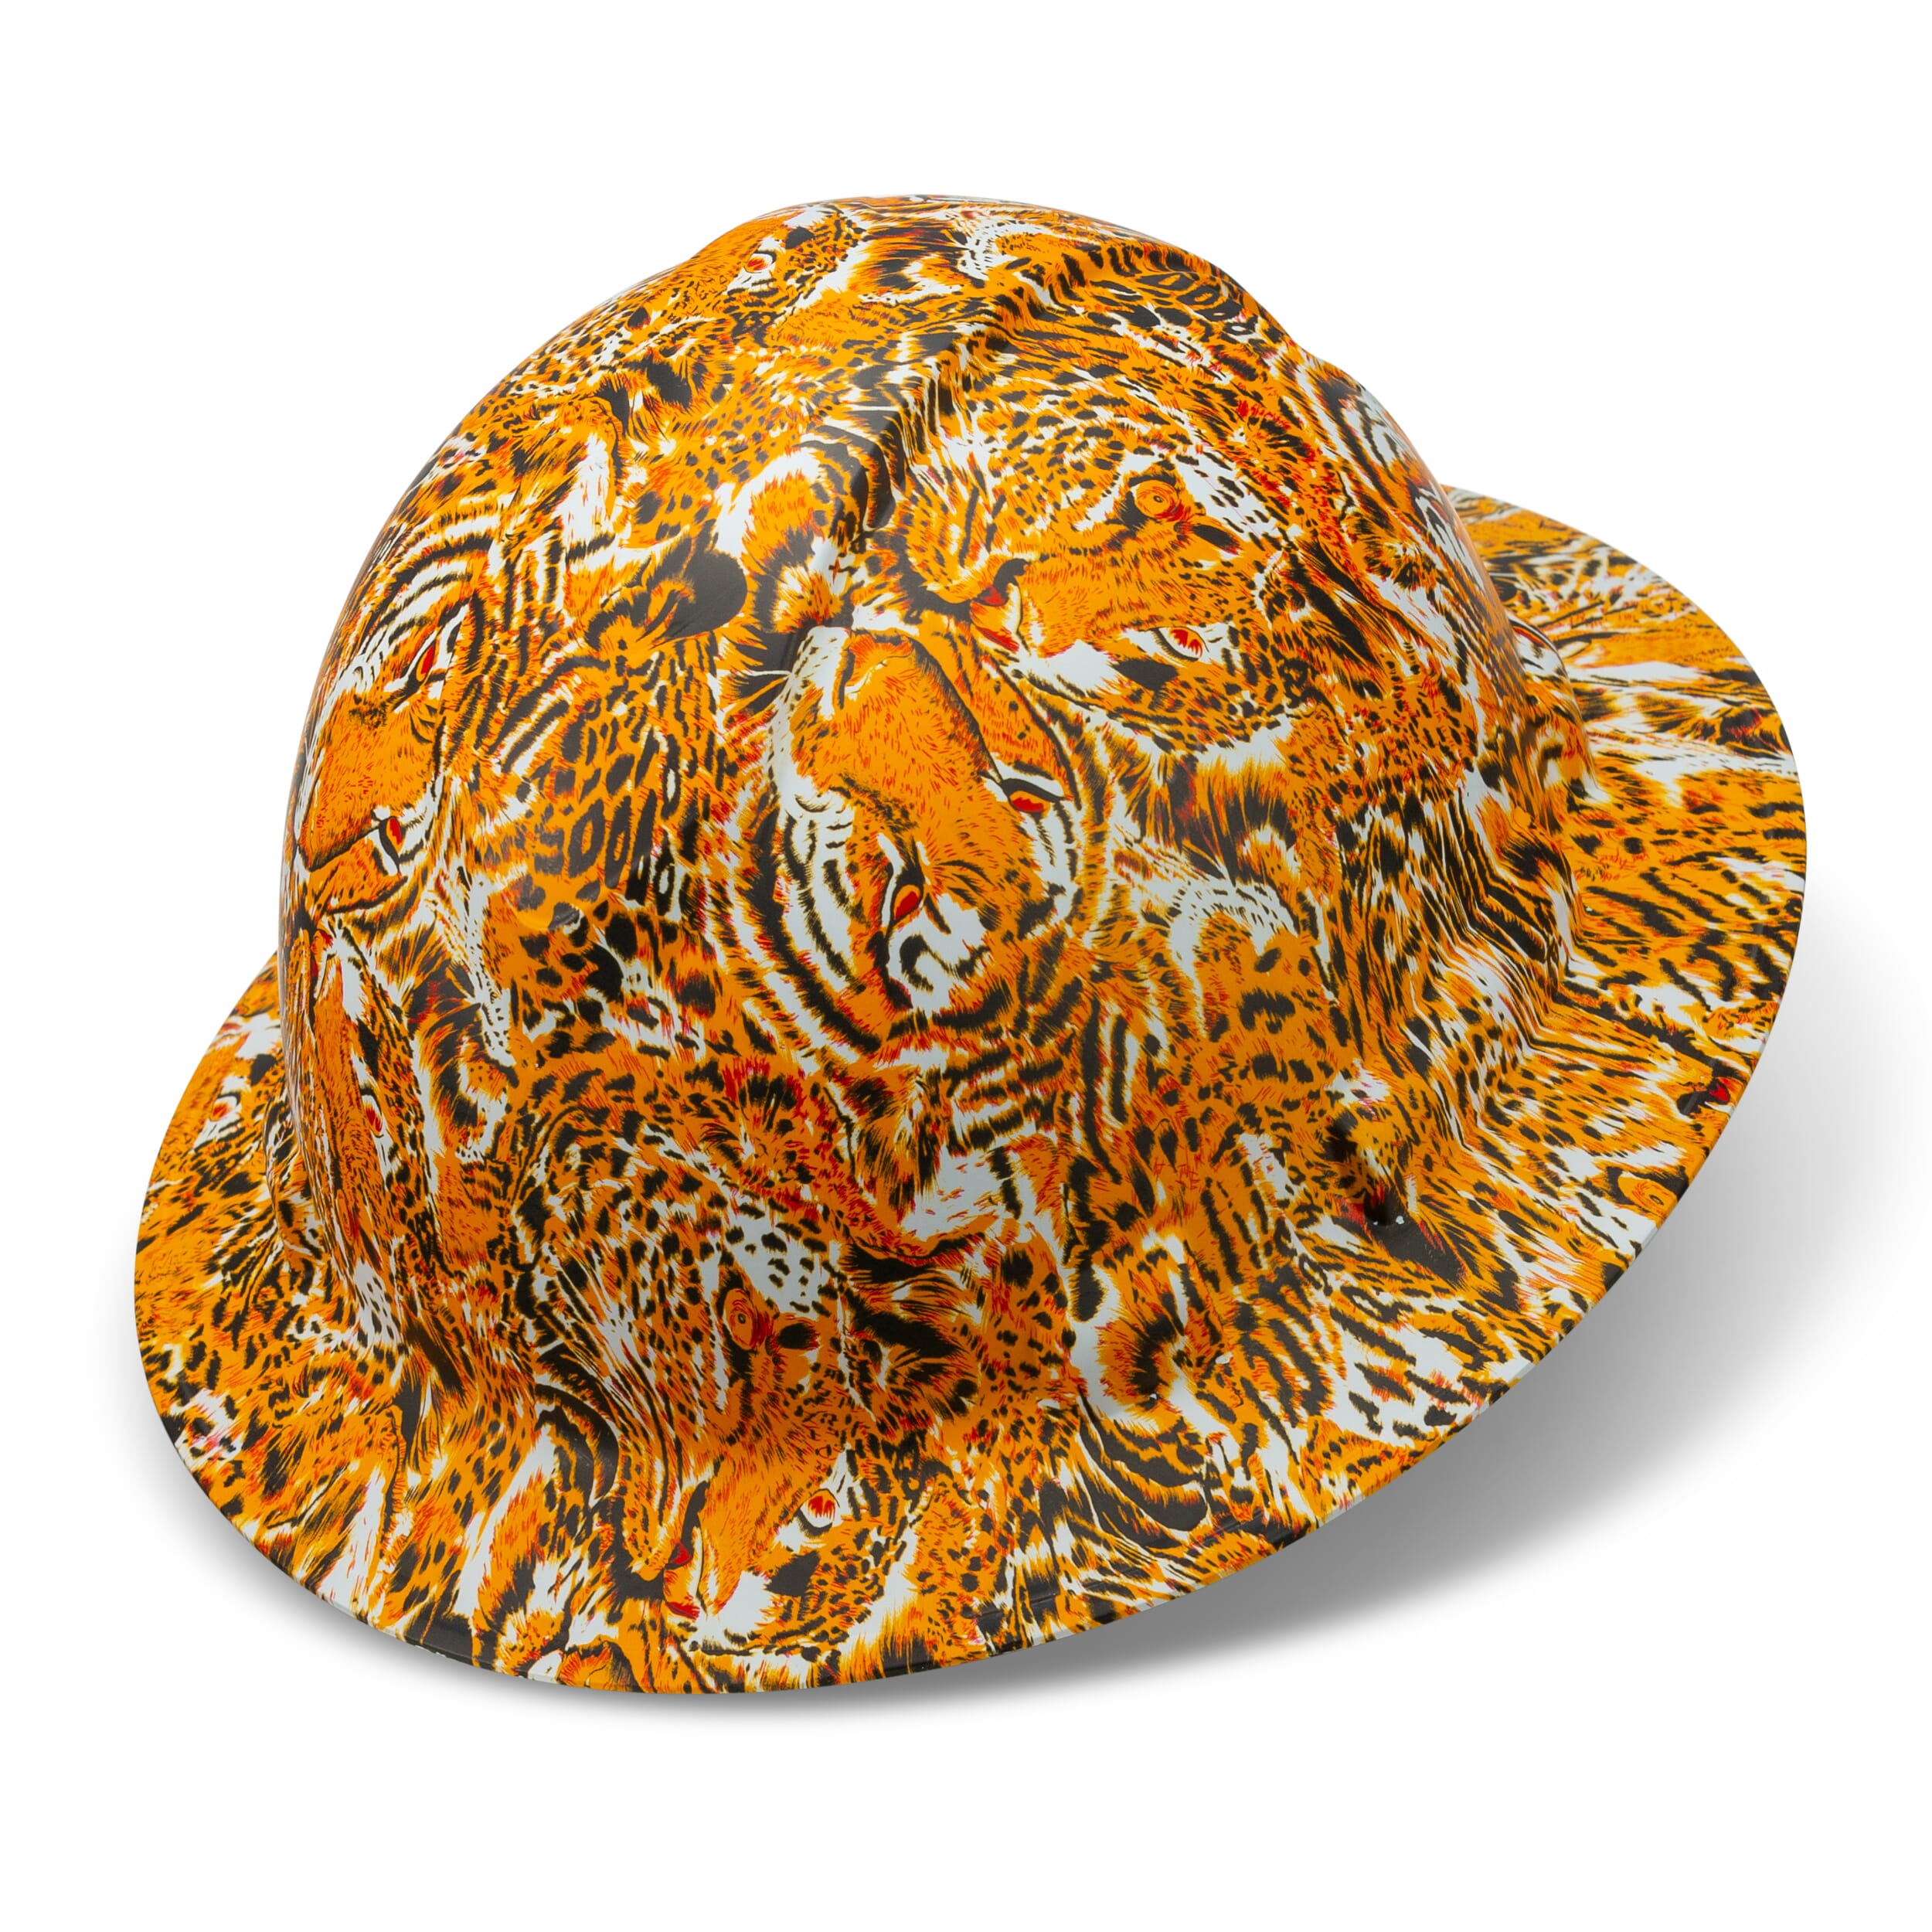 Full Brim Pyramex Hard Hat, Custom Eye Of The Tiger Design, Safety Helmet, 6 Point